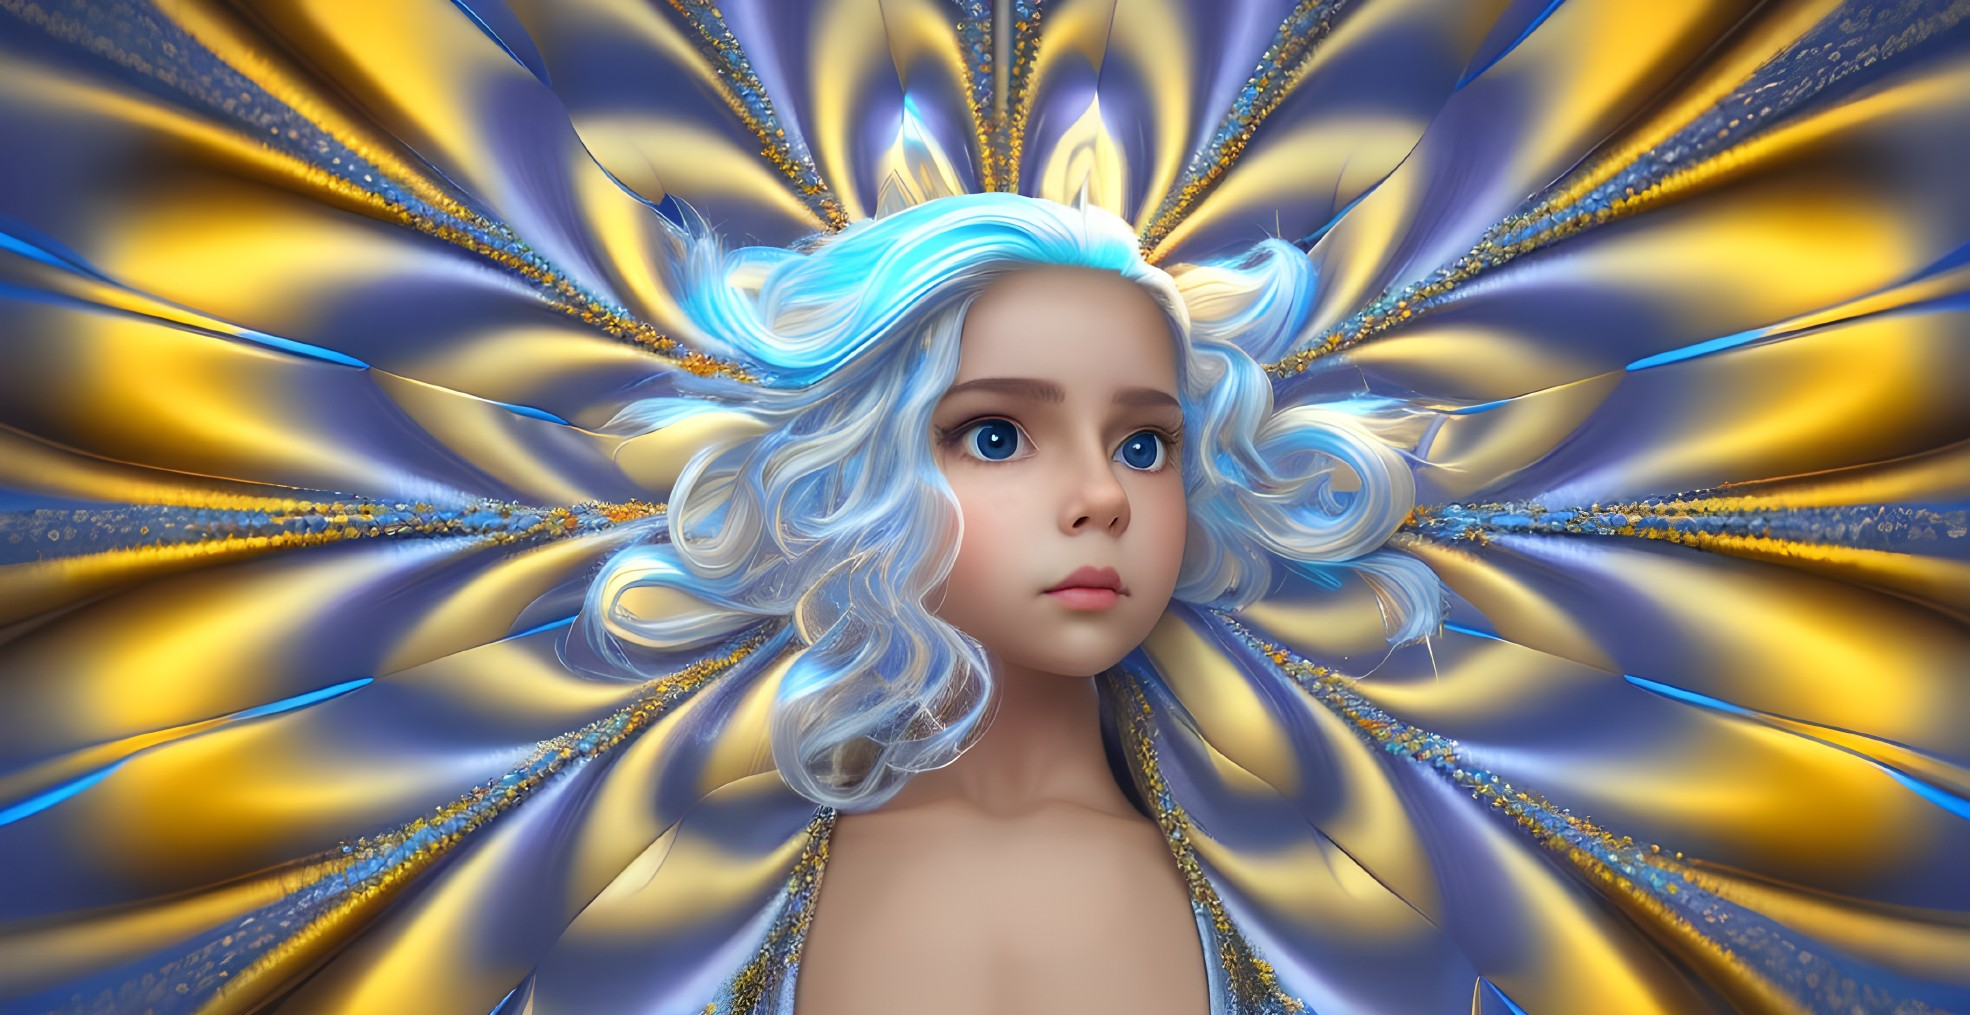 Child with Striking Blue Hair in Radiant Golden Fractal Surroundings